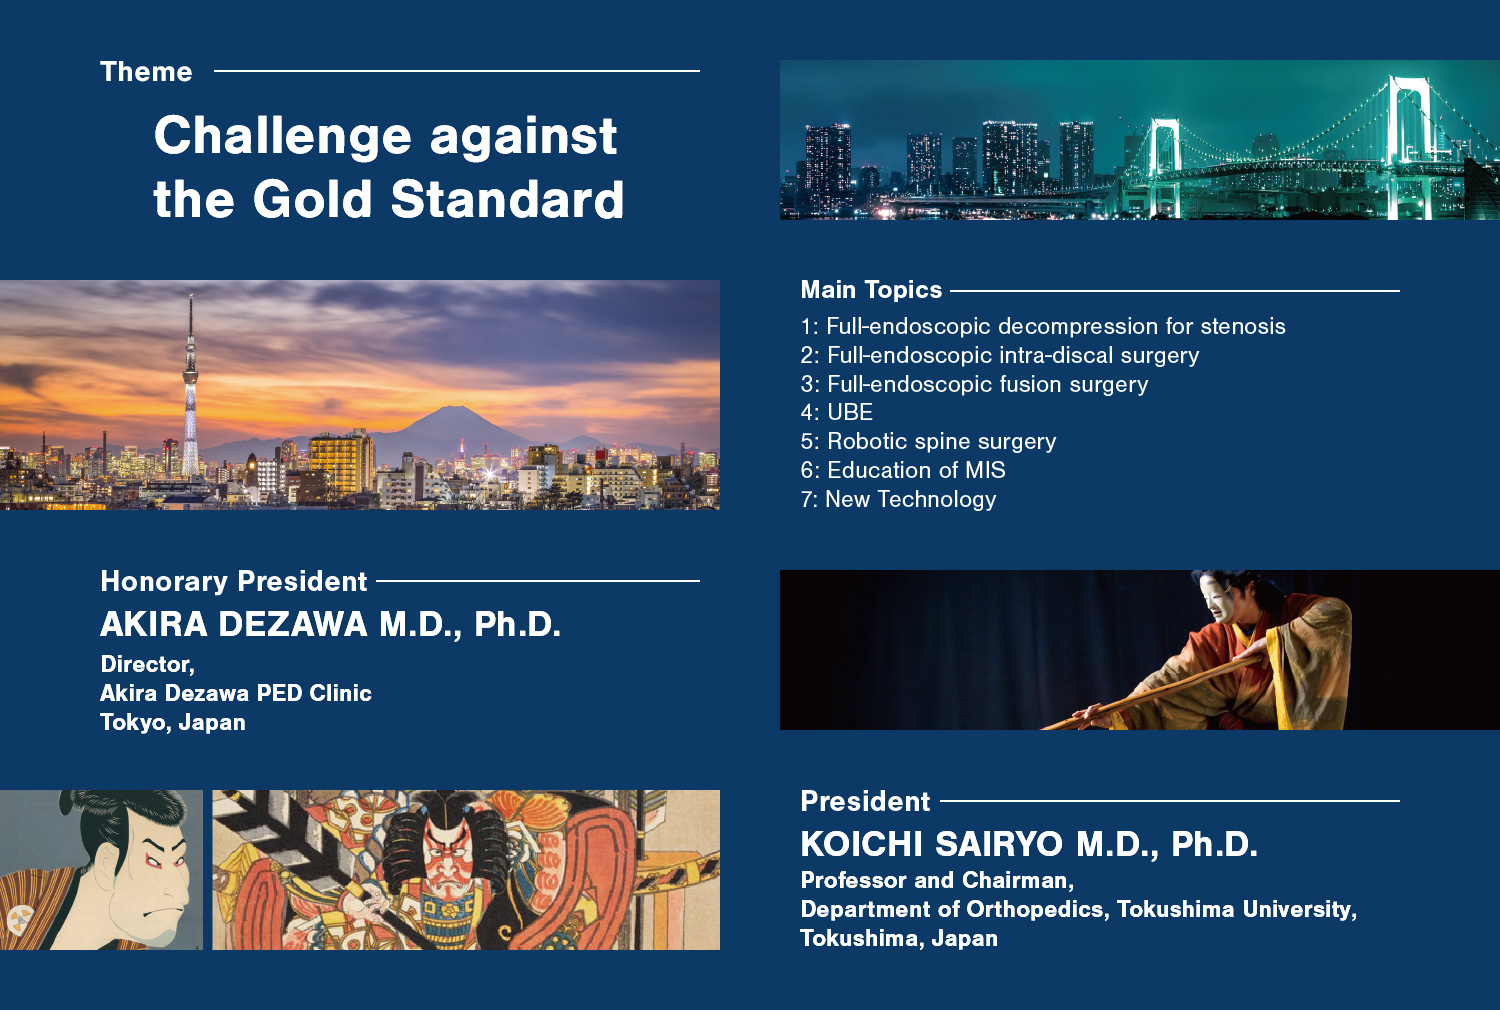 Theme: Challenge against the Gold Standard / Honorary President: AKIRA DEZAWA M.D., Ph.D. (Director, Akira Dezawa PED Clinic Tokyo, Japan) / President: KOICHI SAIRYO M.D., Ph.D. (Professor and Chairman, Department of Orthopedics, Tokushima University, Tokushima, Japan)